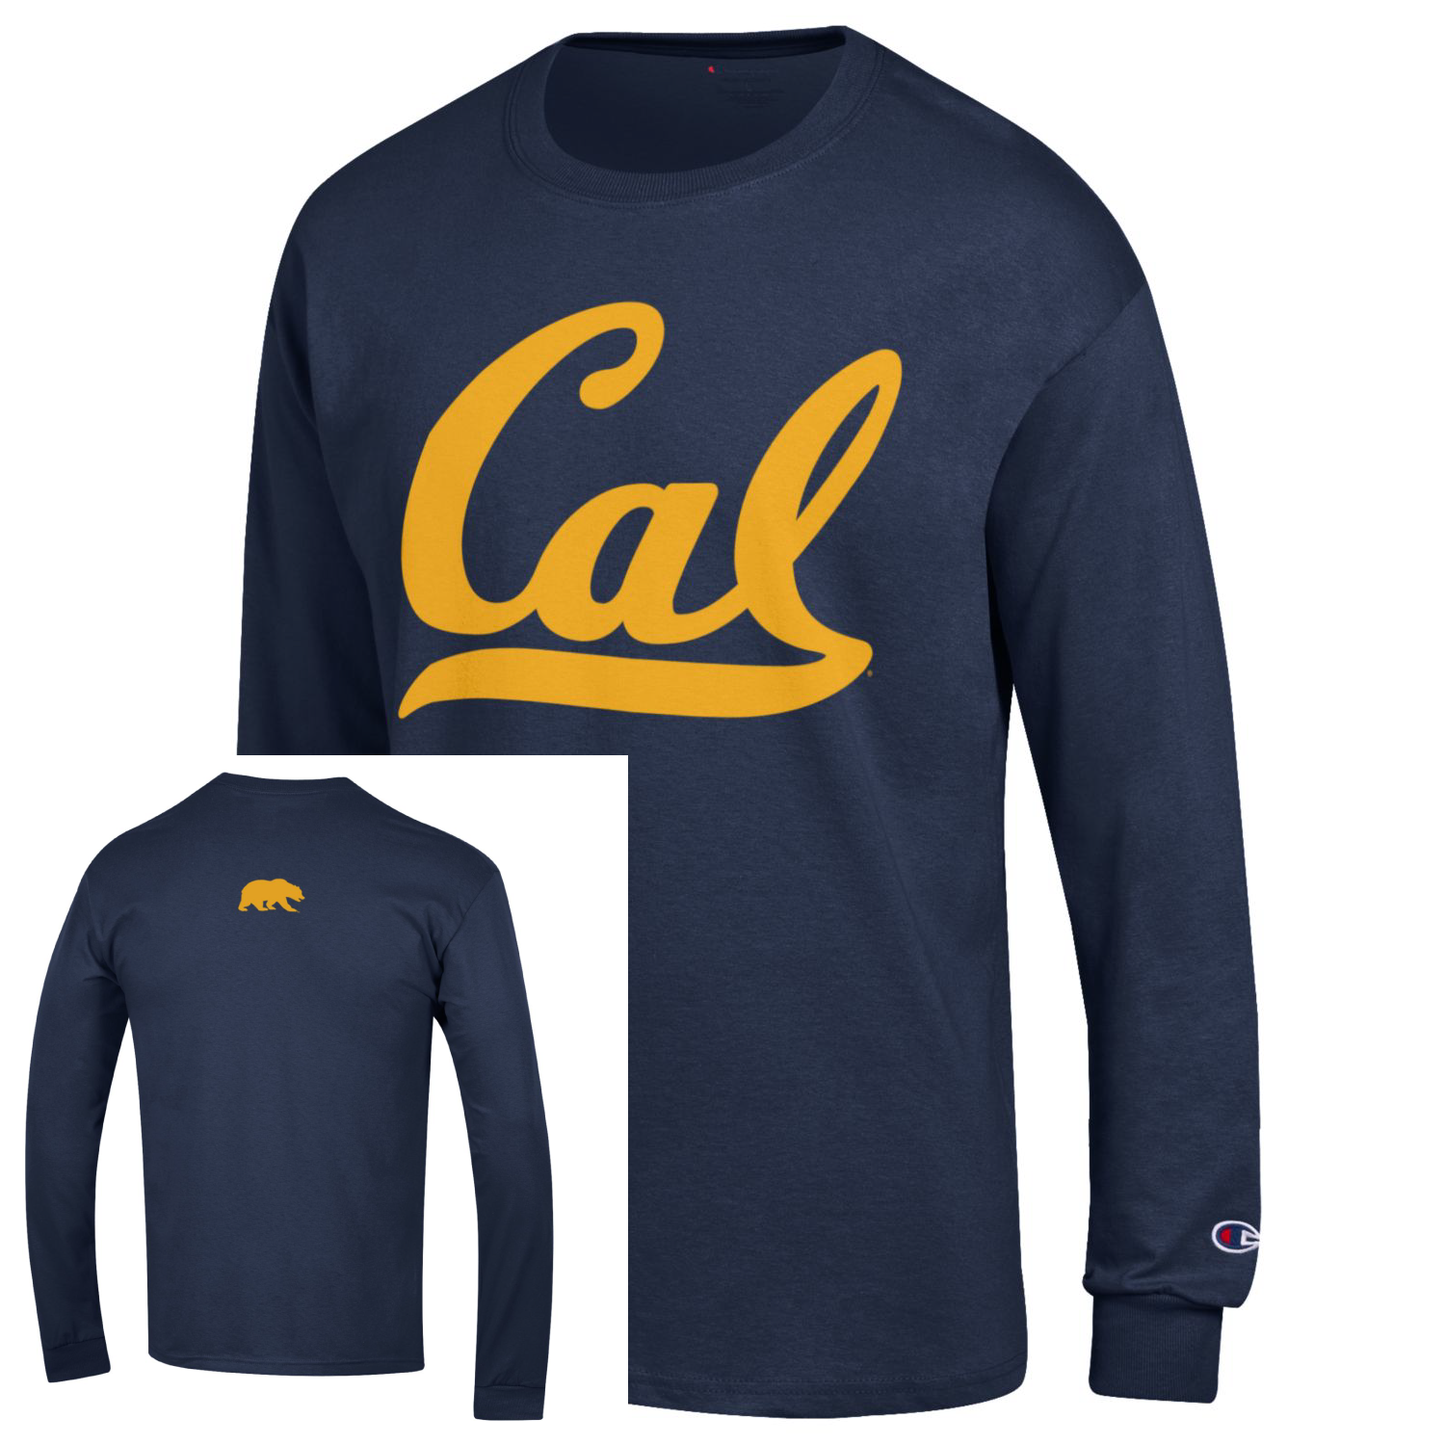 UC Berkeley Cal Champion Men's Long Sleeve T-Shirt - Navy-Shop College Wear